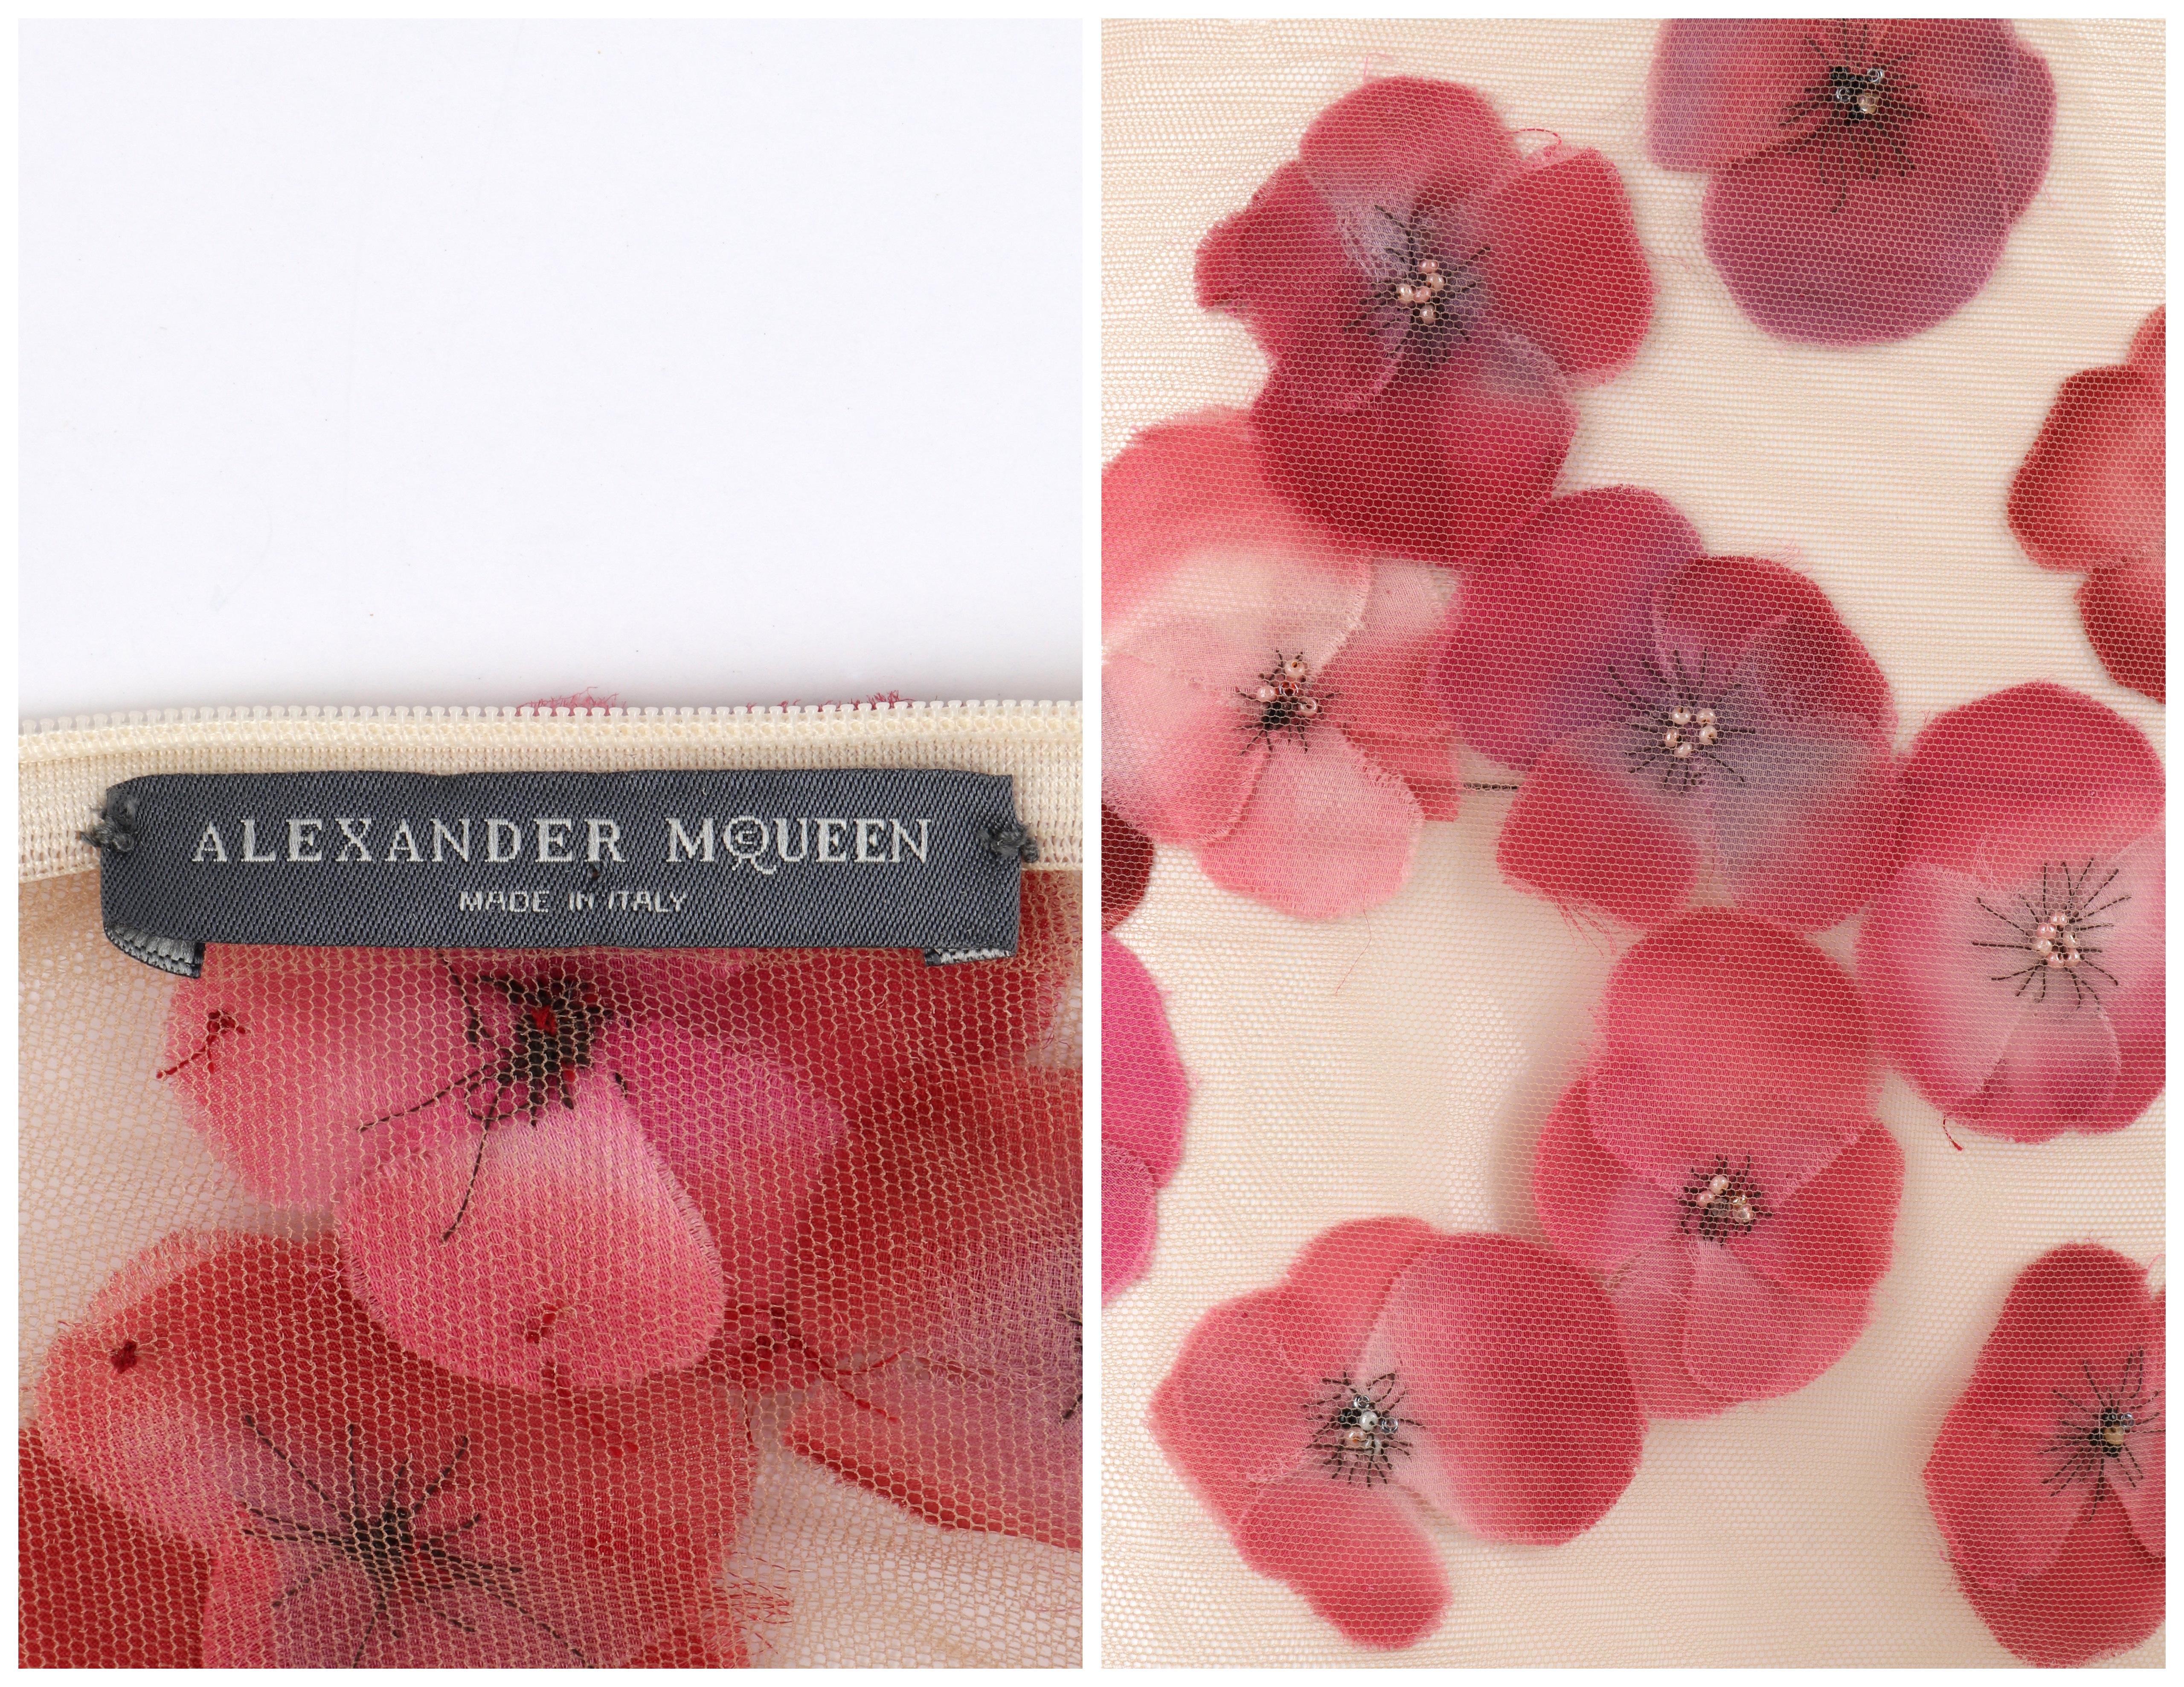 ALEXANDER McQUEEN S/S 2009 Pink Red Floral Sheer Nude Mesh Bodysuit For Sale 2